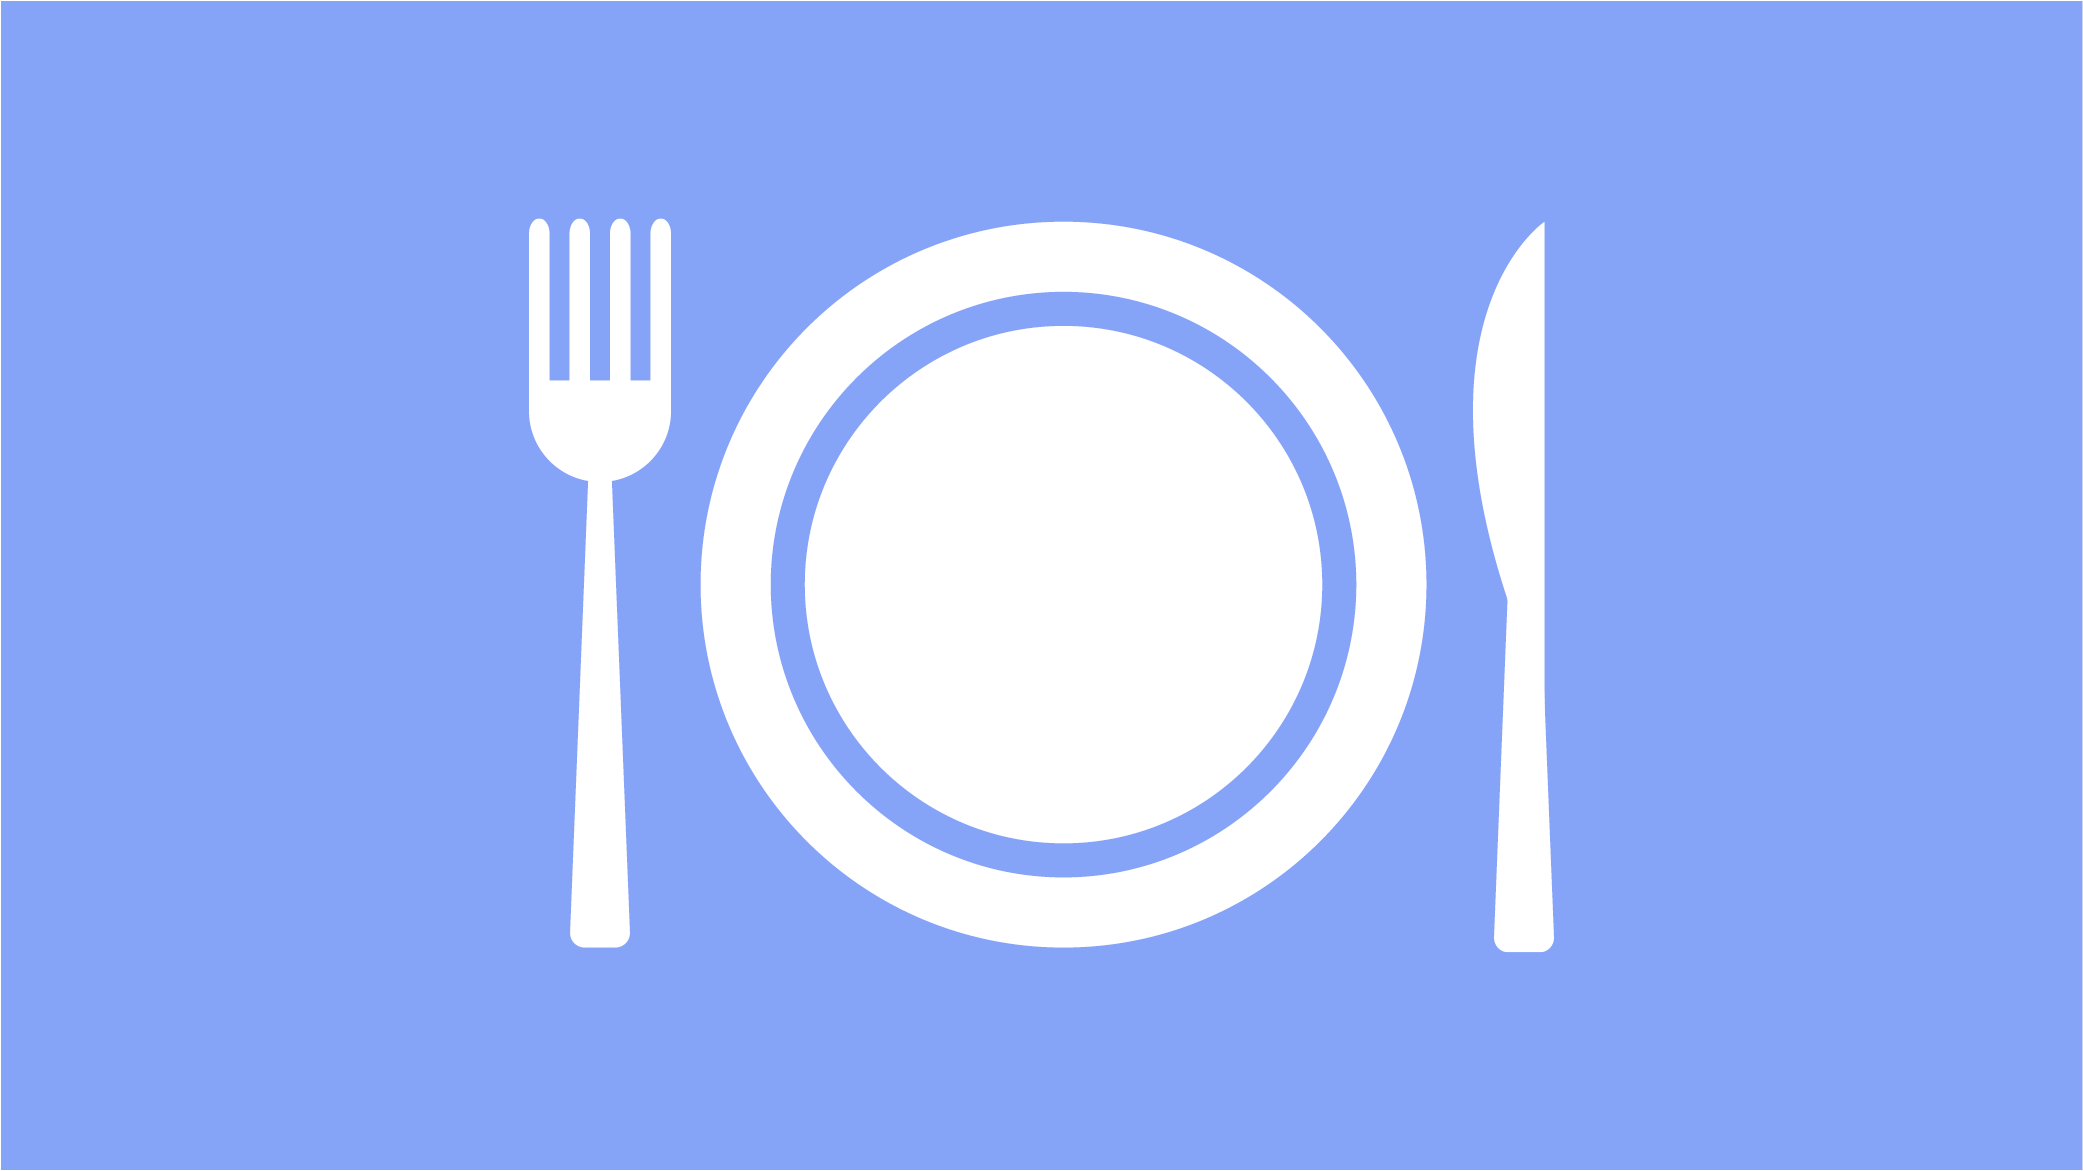 Illustration of plate, knife and fork in white on light blue bakcground